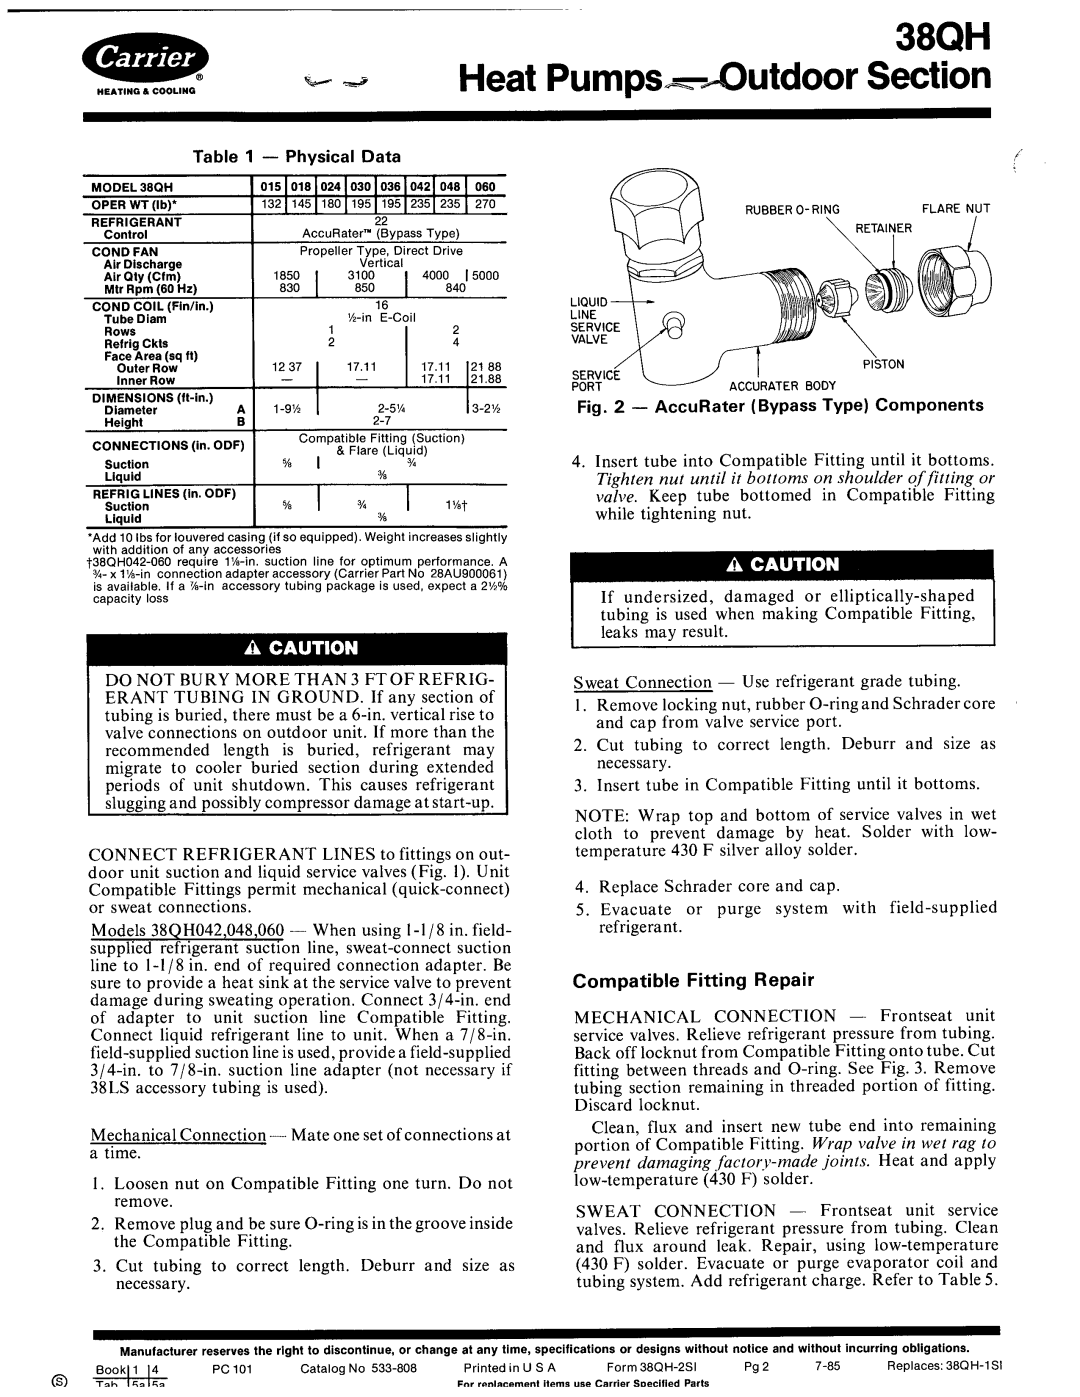 Carrier 38QH manual 